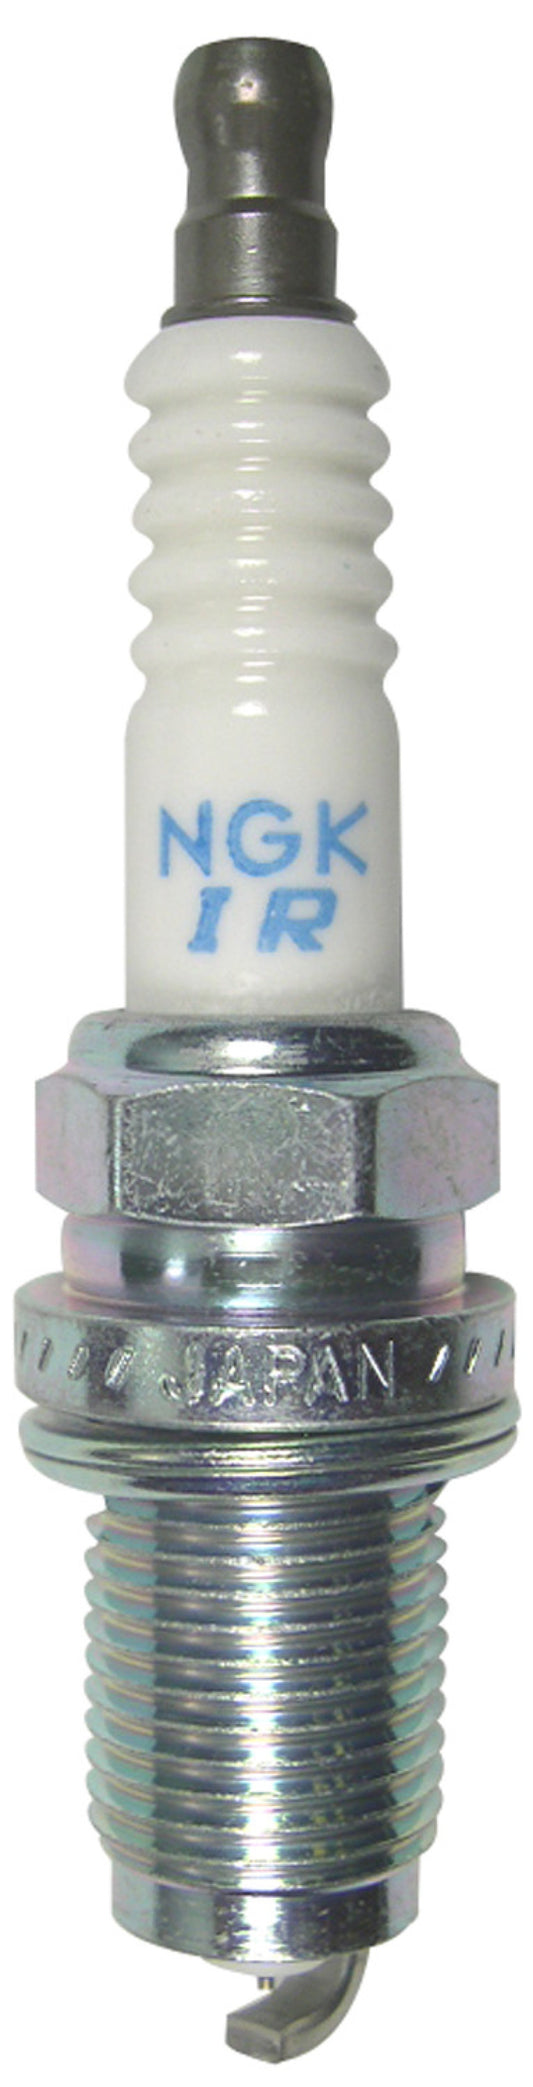 NGK Laser Iridium Long Life Spark Plugs Box of 4 (IZFR6K-11S)